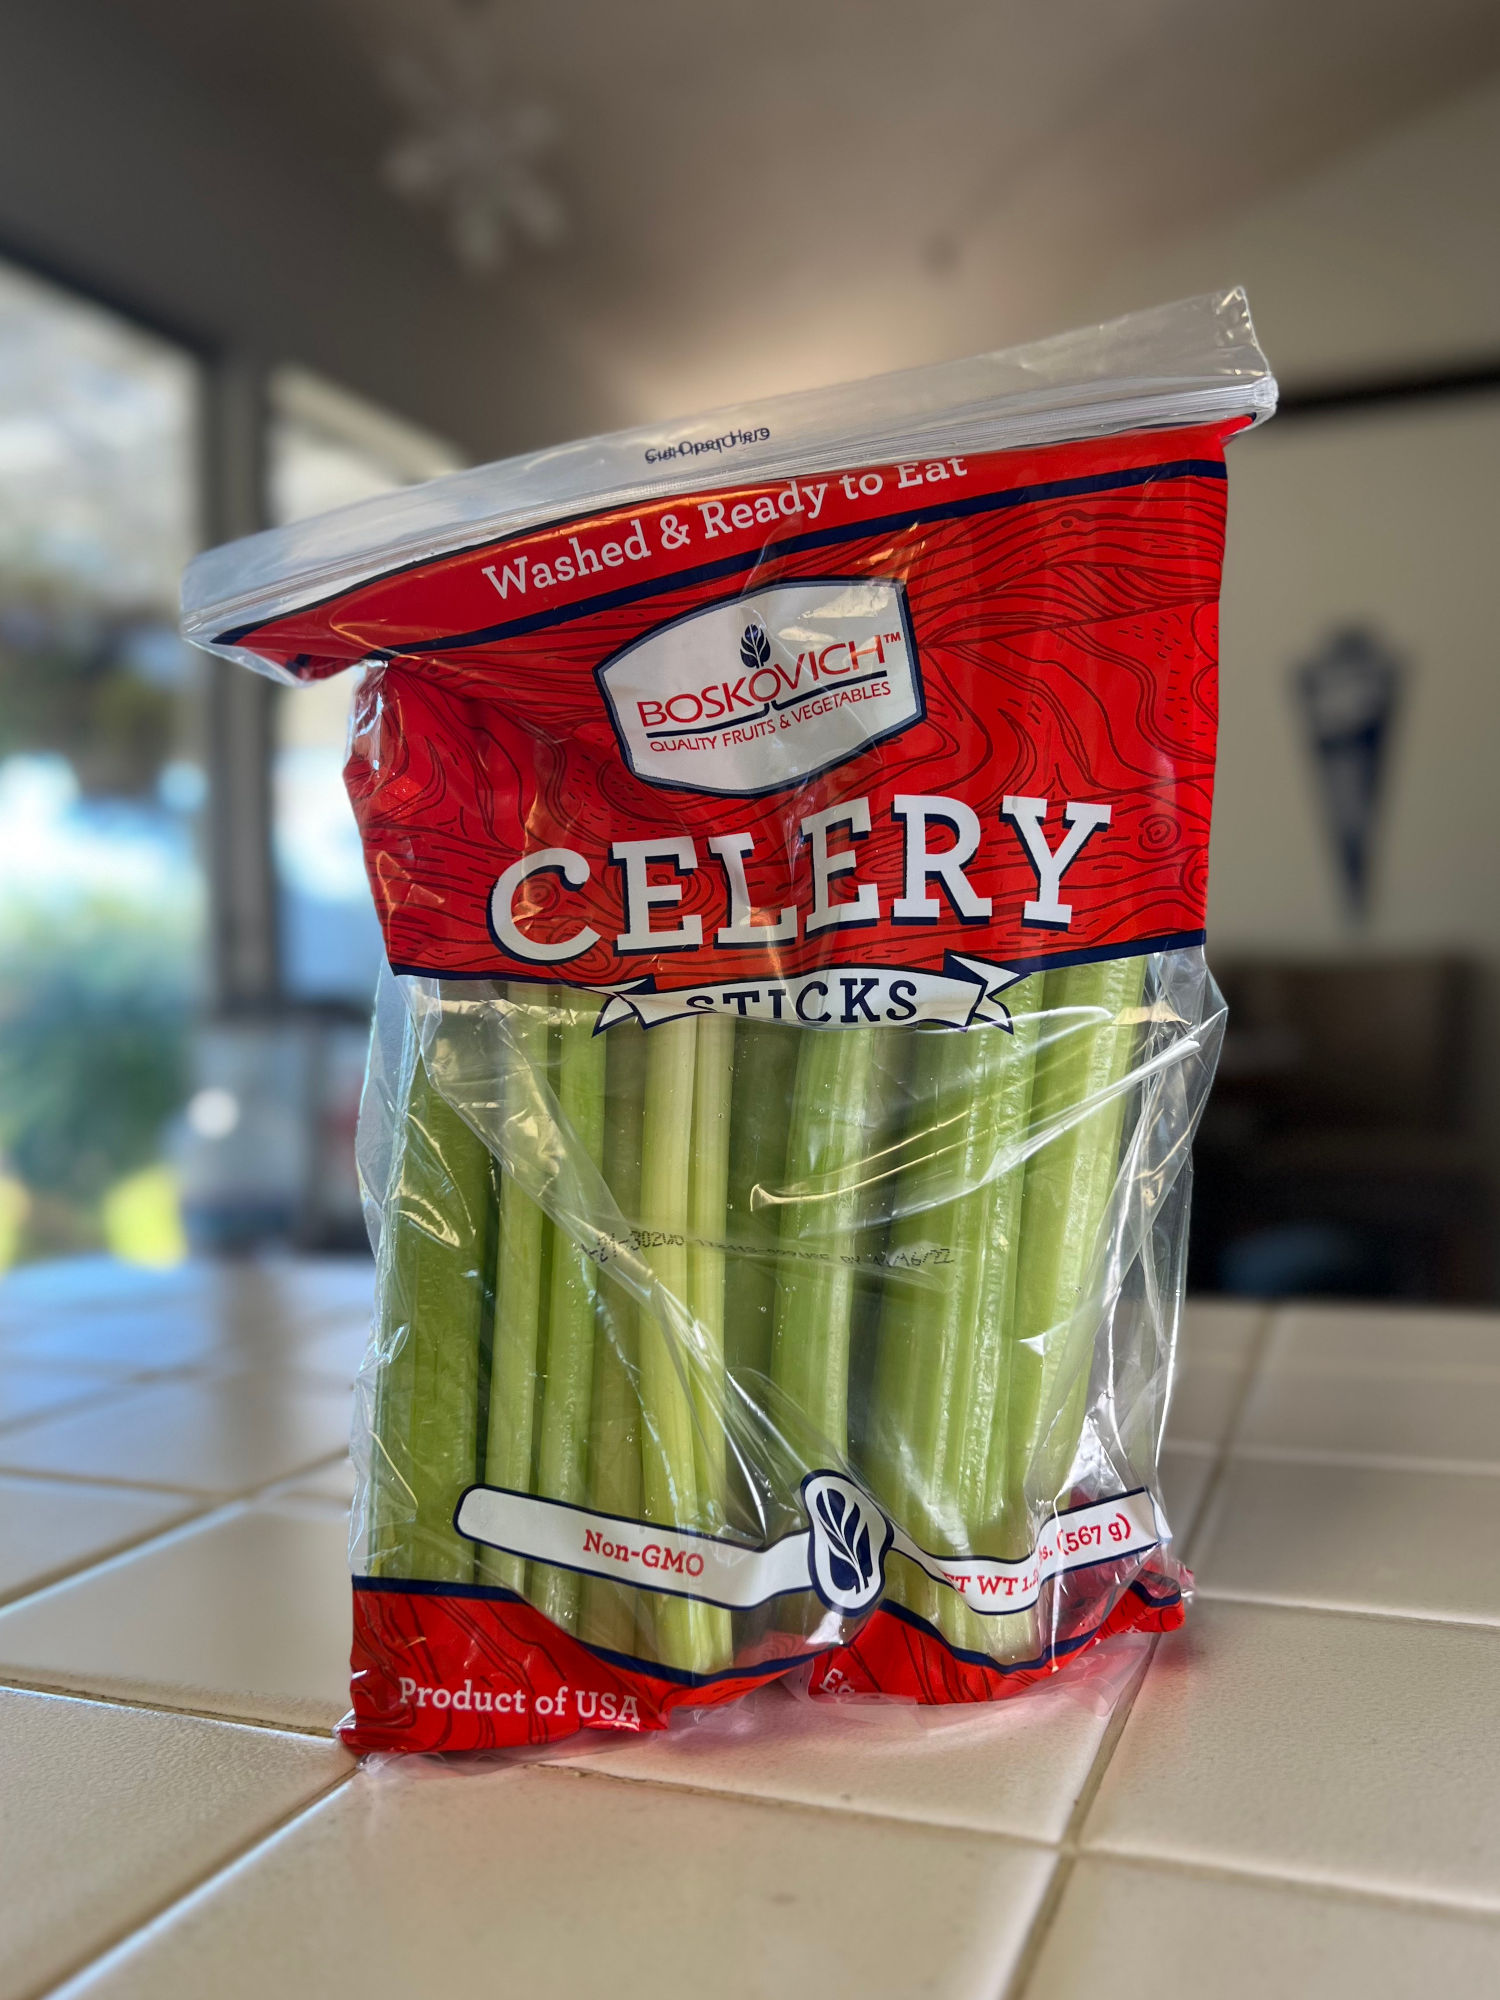 Celery Sticks Boskovich